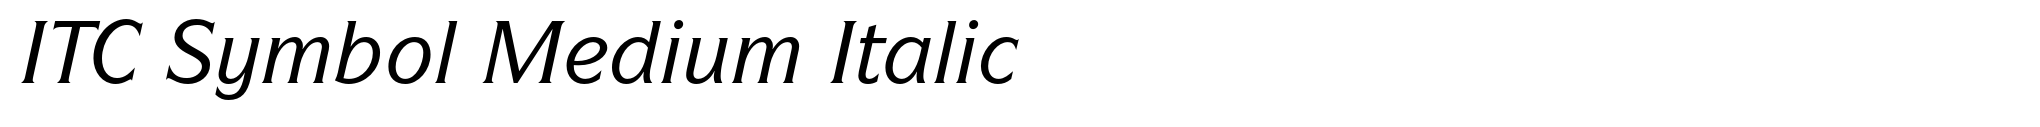 ITC Symbol Medium Italic image